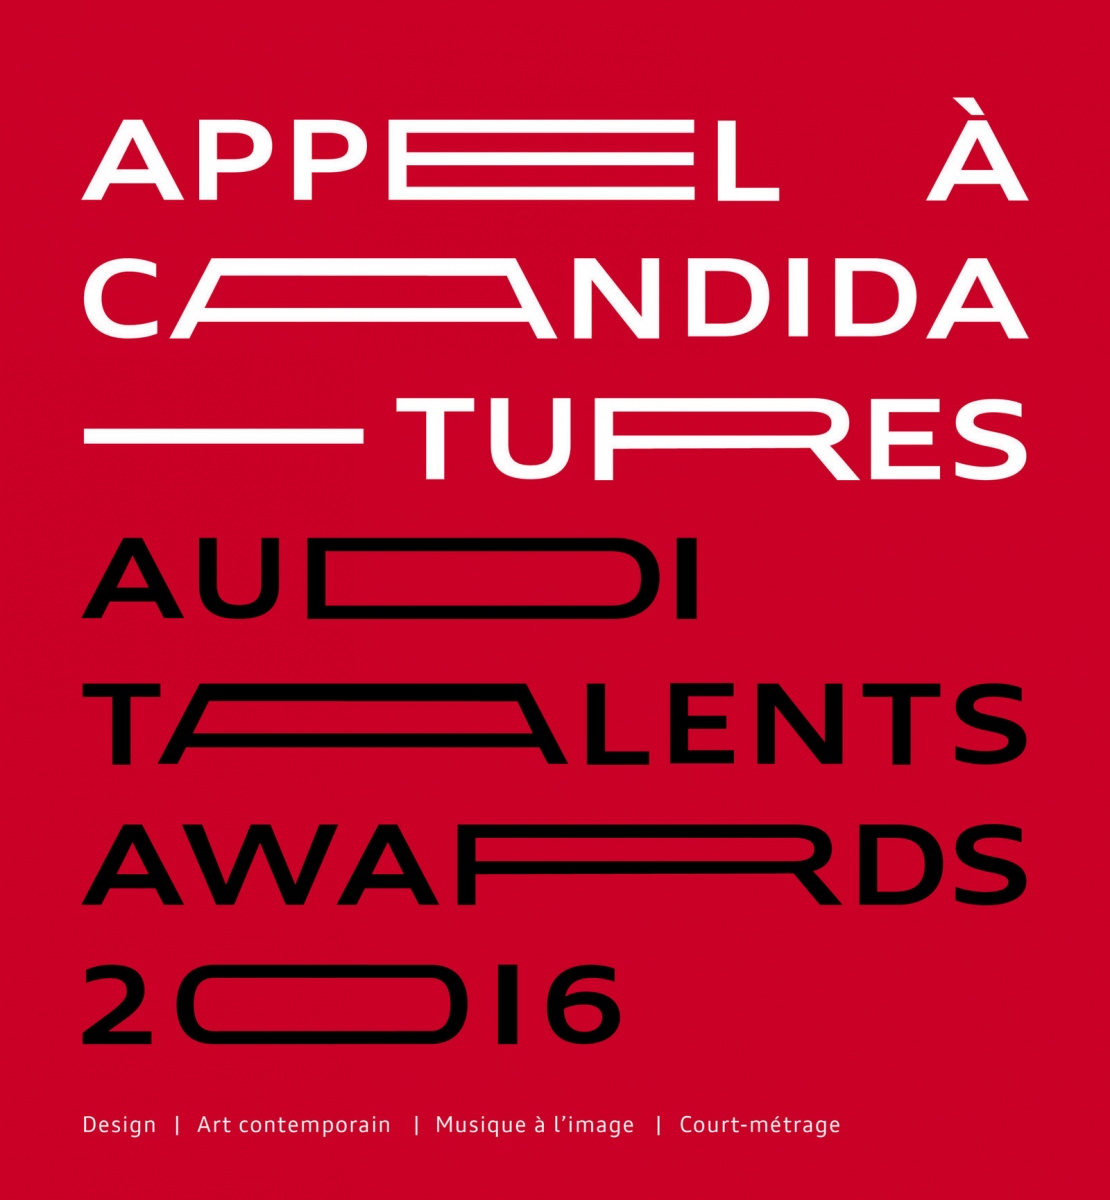 Audi Talents Awards 2016